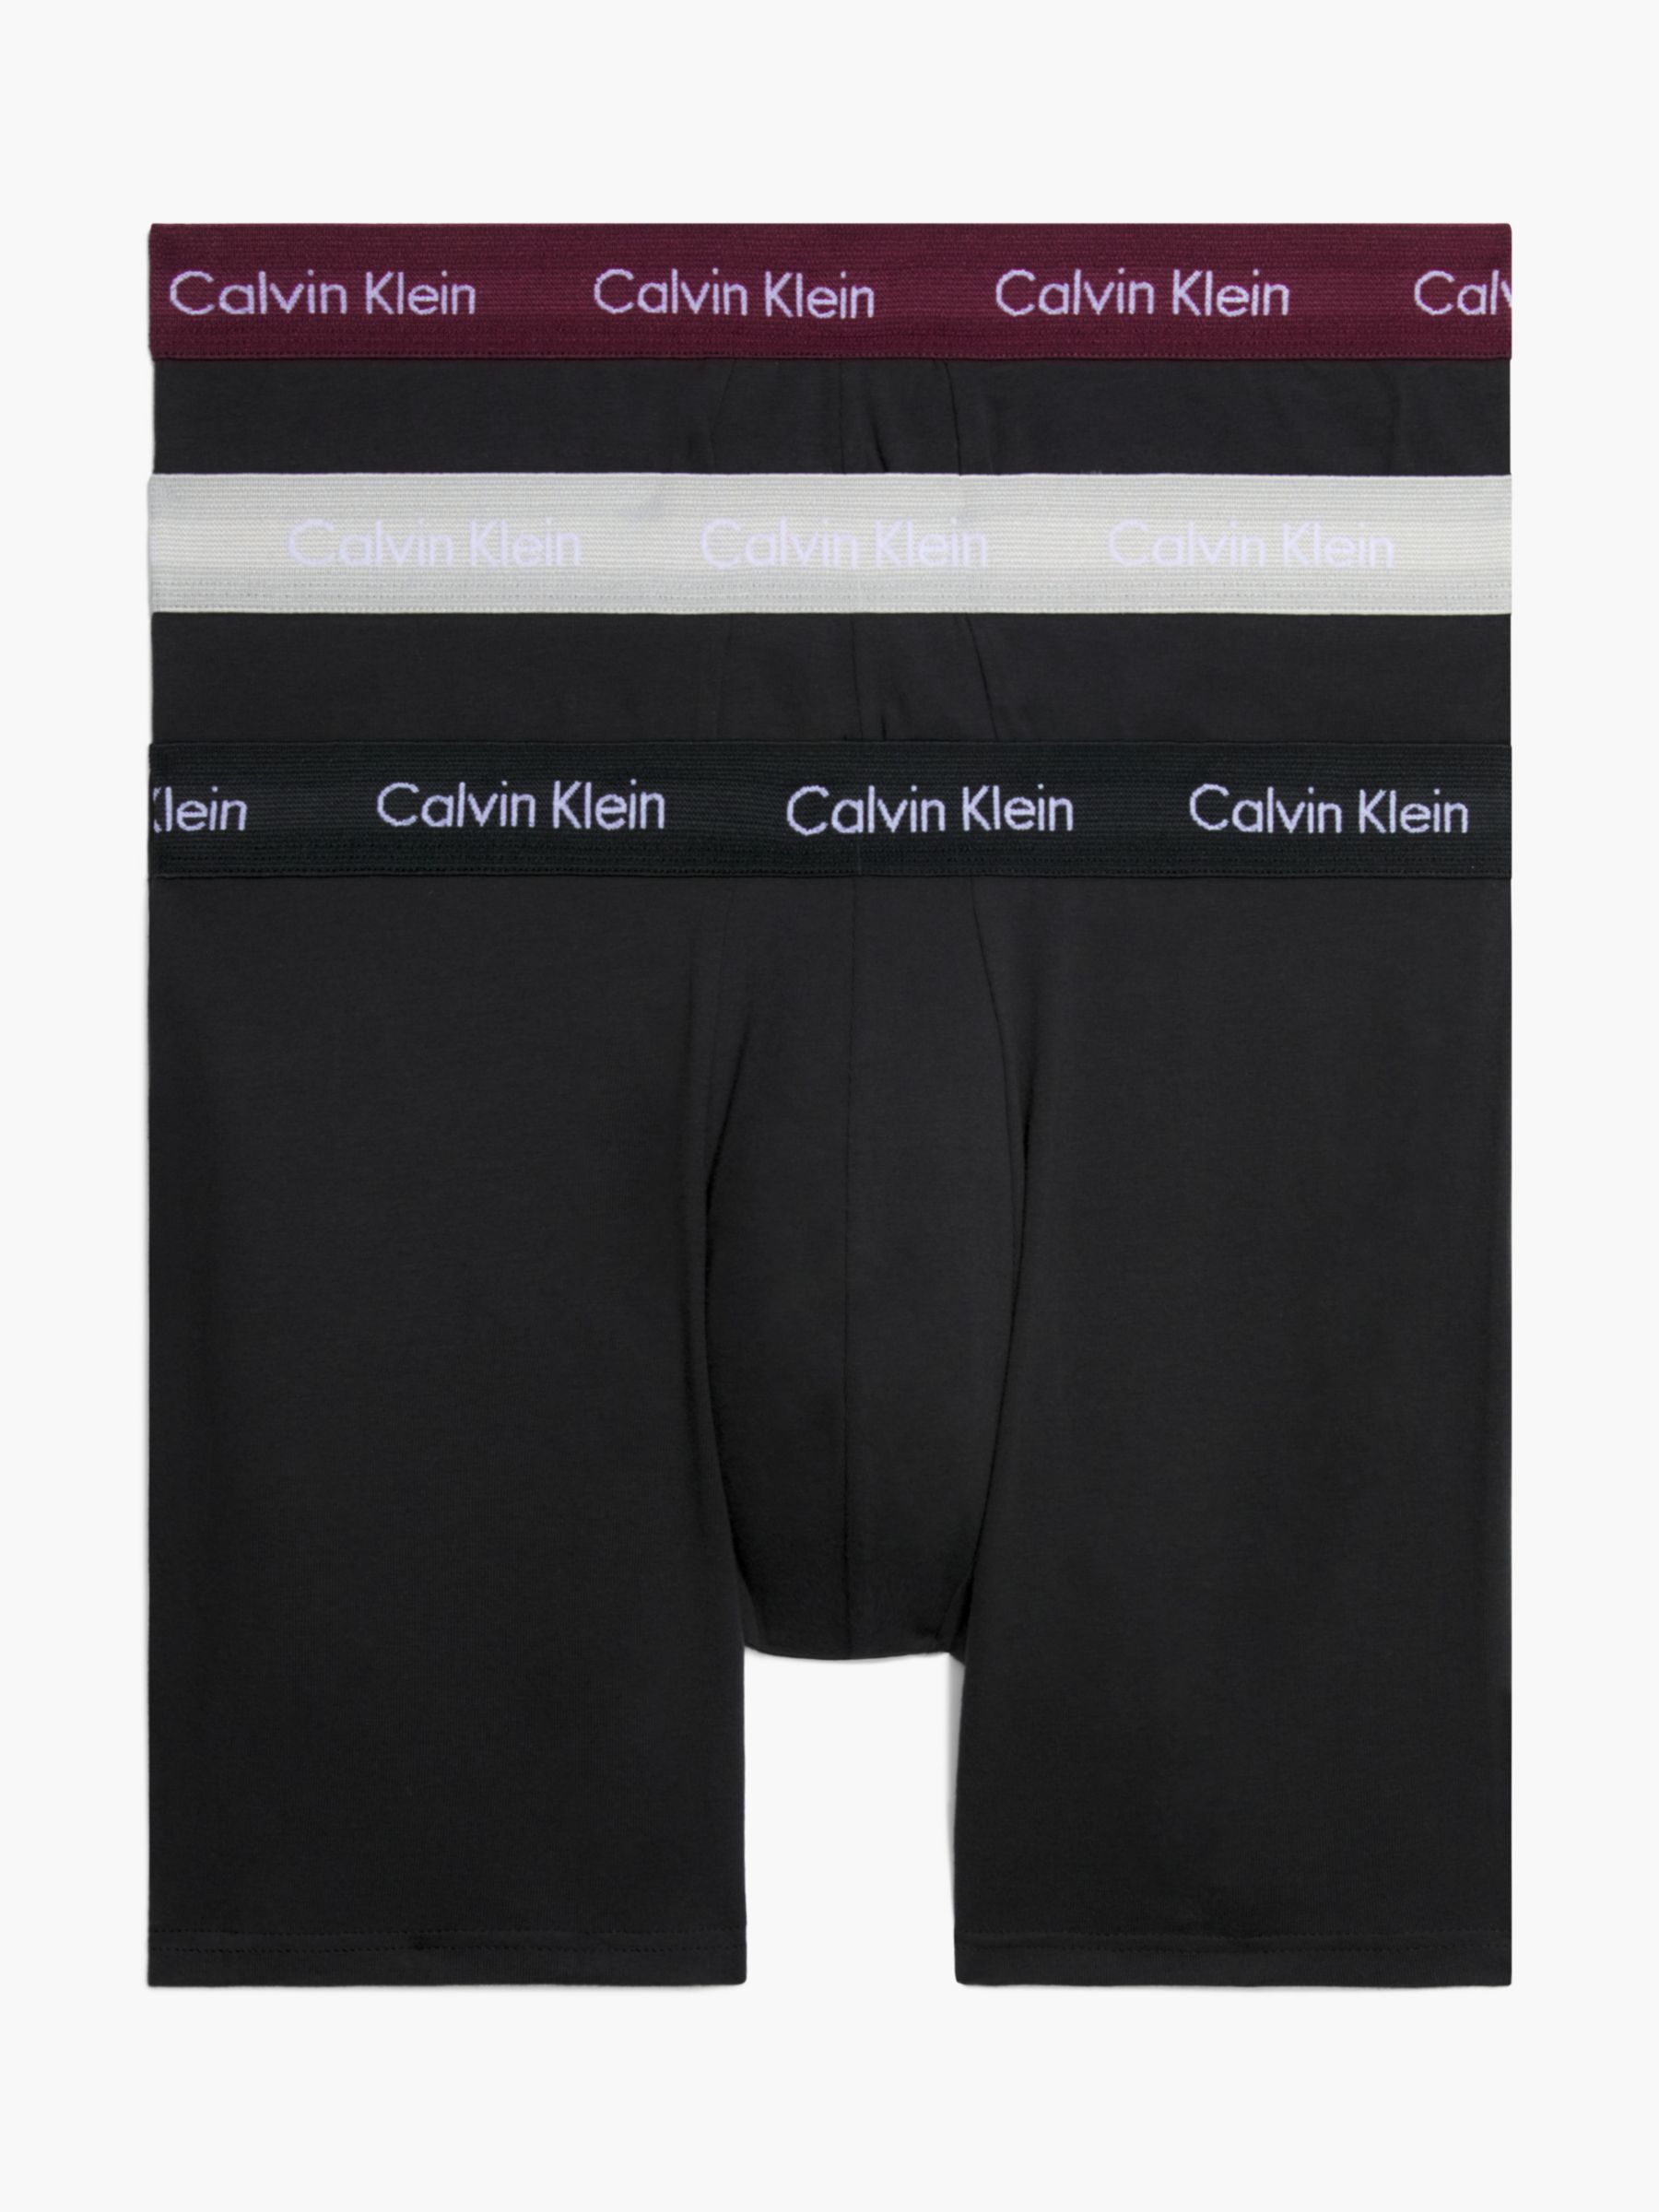 Calvin Klein Cotton Stretch Boxer Brief, Pack of 3, Black/Port/Porpoise ...